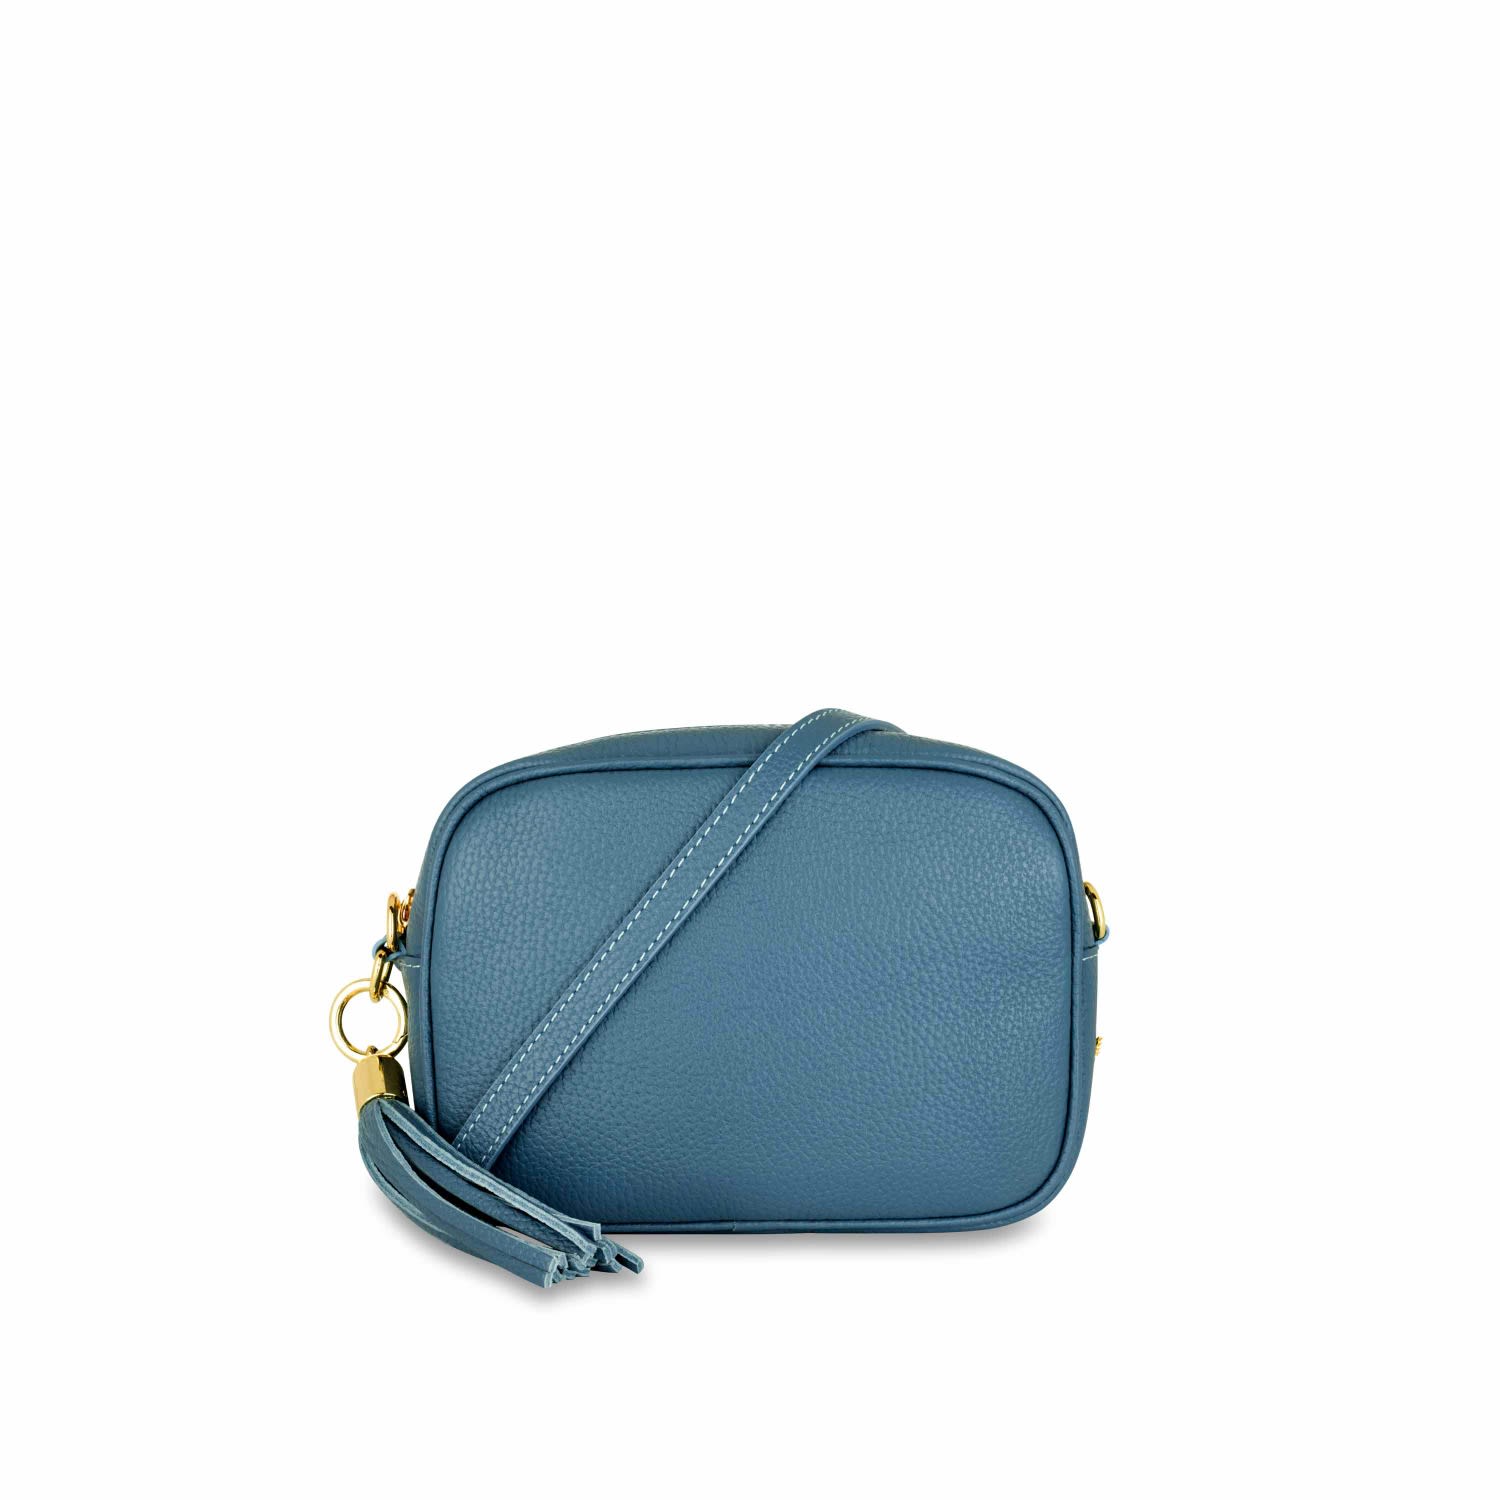 Apatchy London Women's The Tassel Denim Blue Leather Crossbody Bag